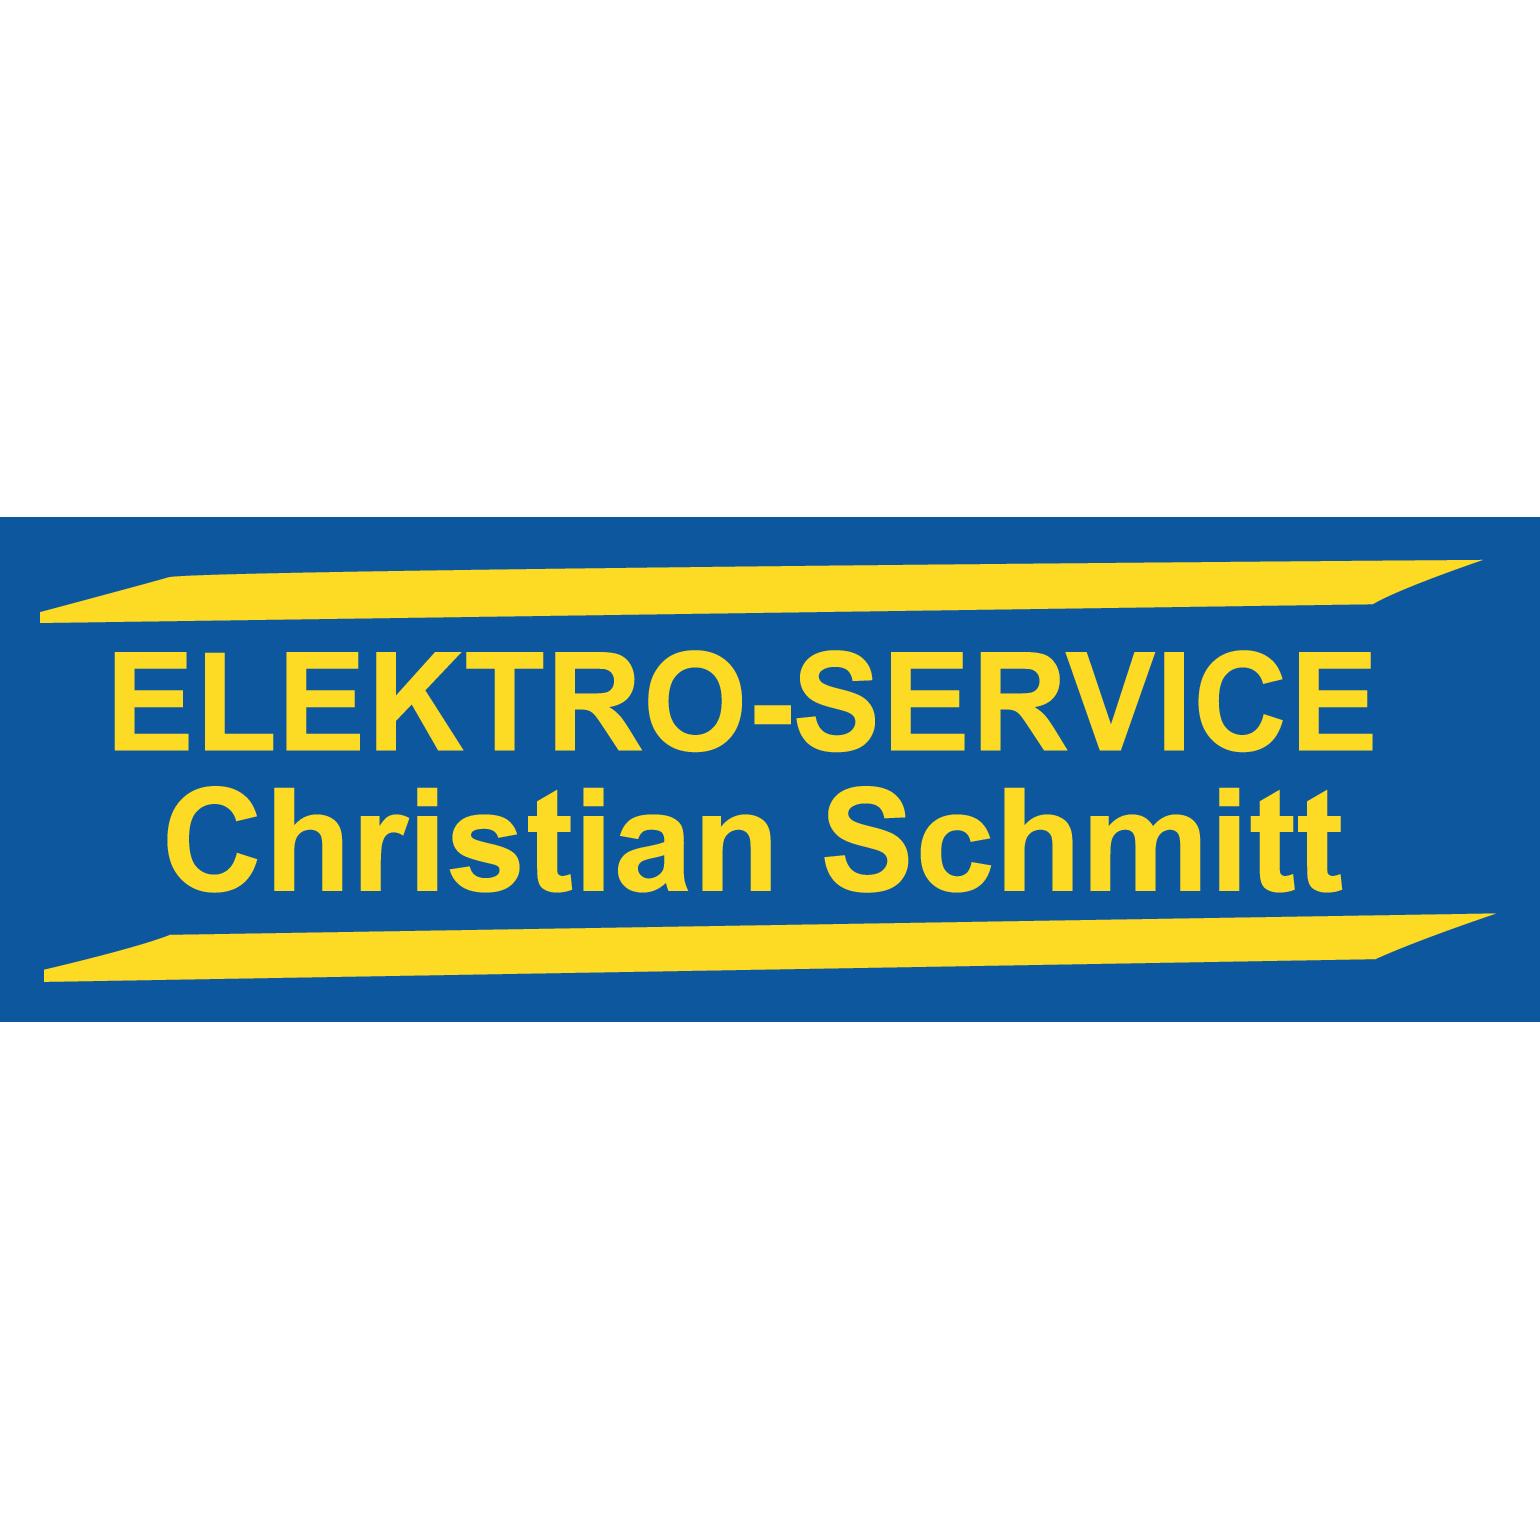 Elektro-Service Christian Schmitt in Klingenberg am Main - Logo